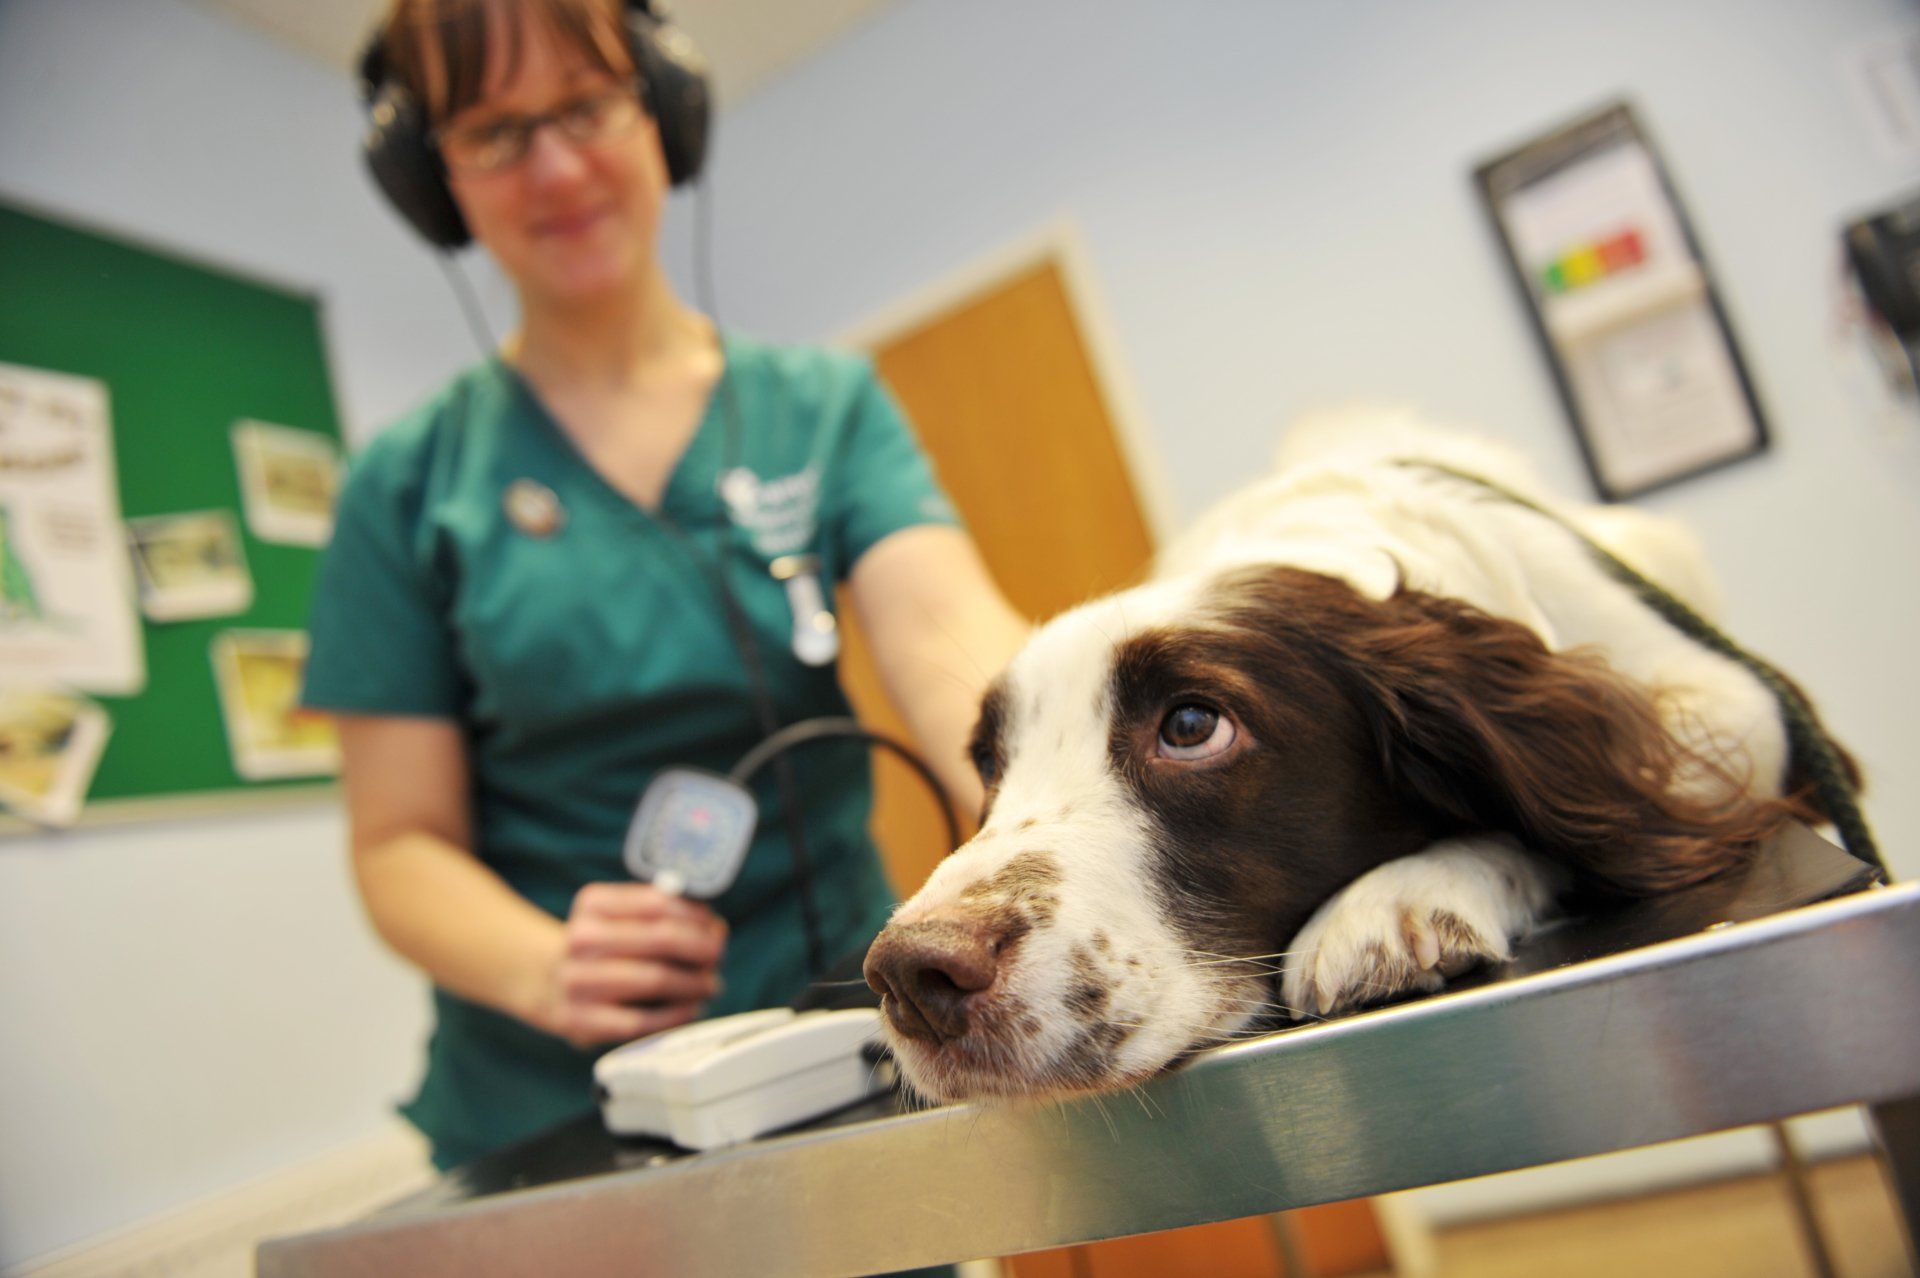 Nurse Emily records blood pressure on a dog